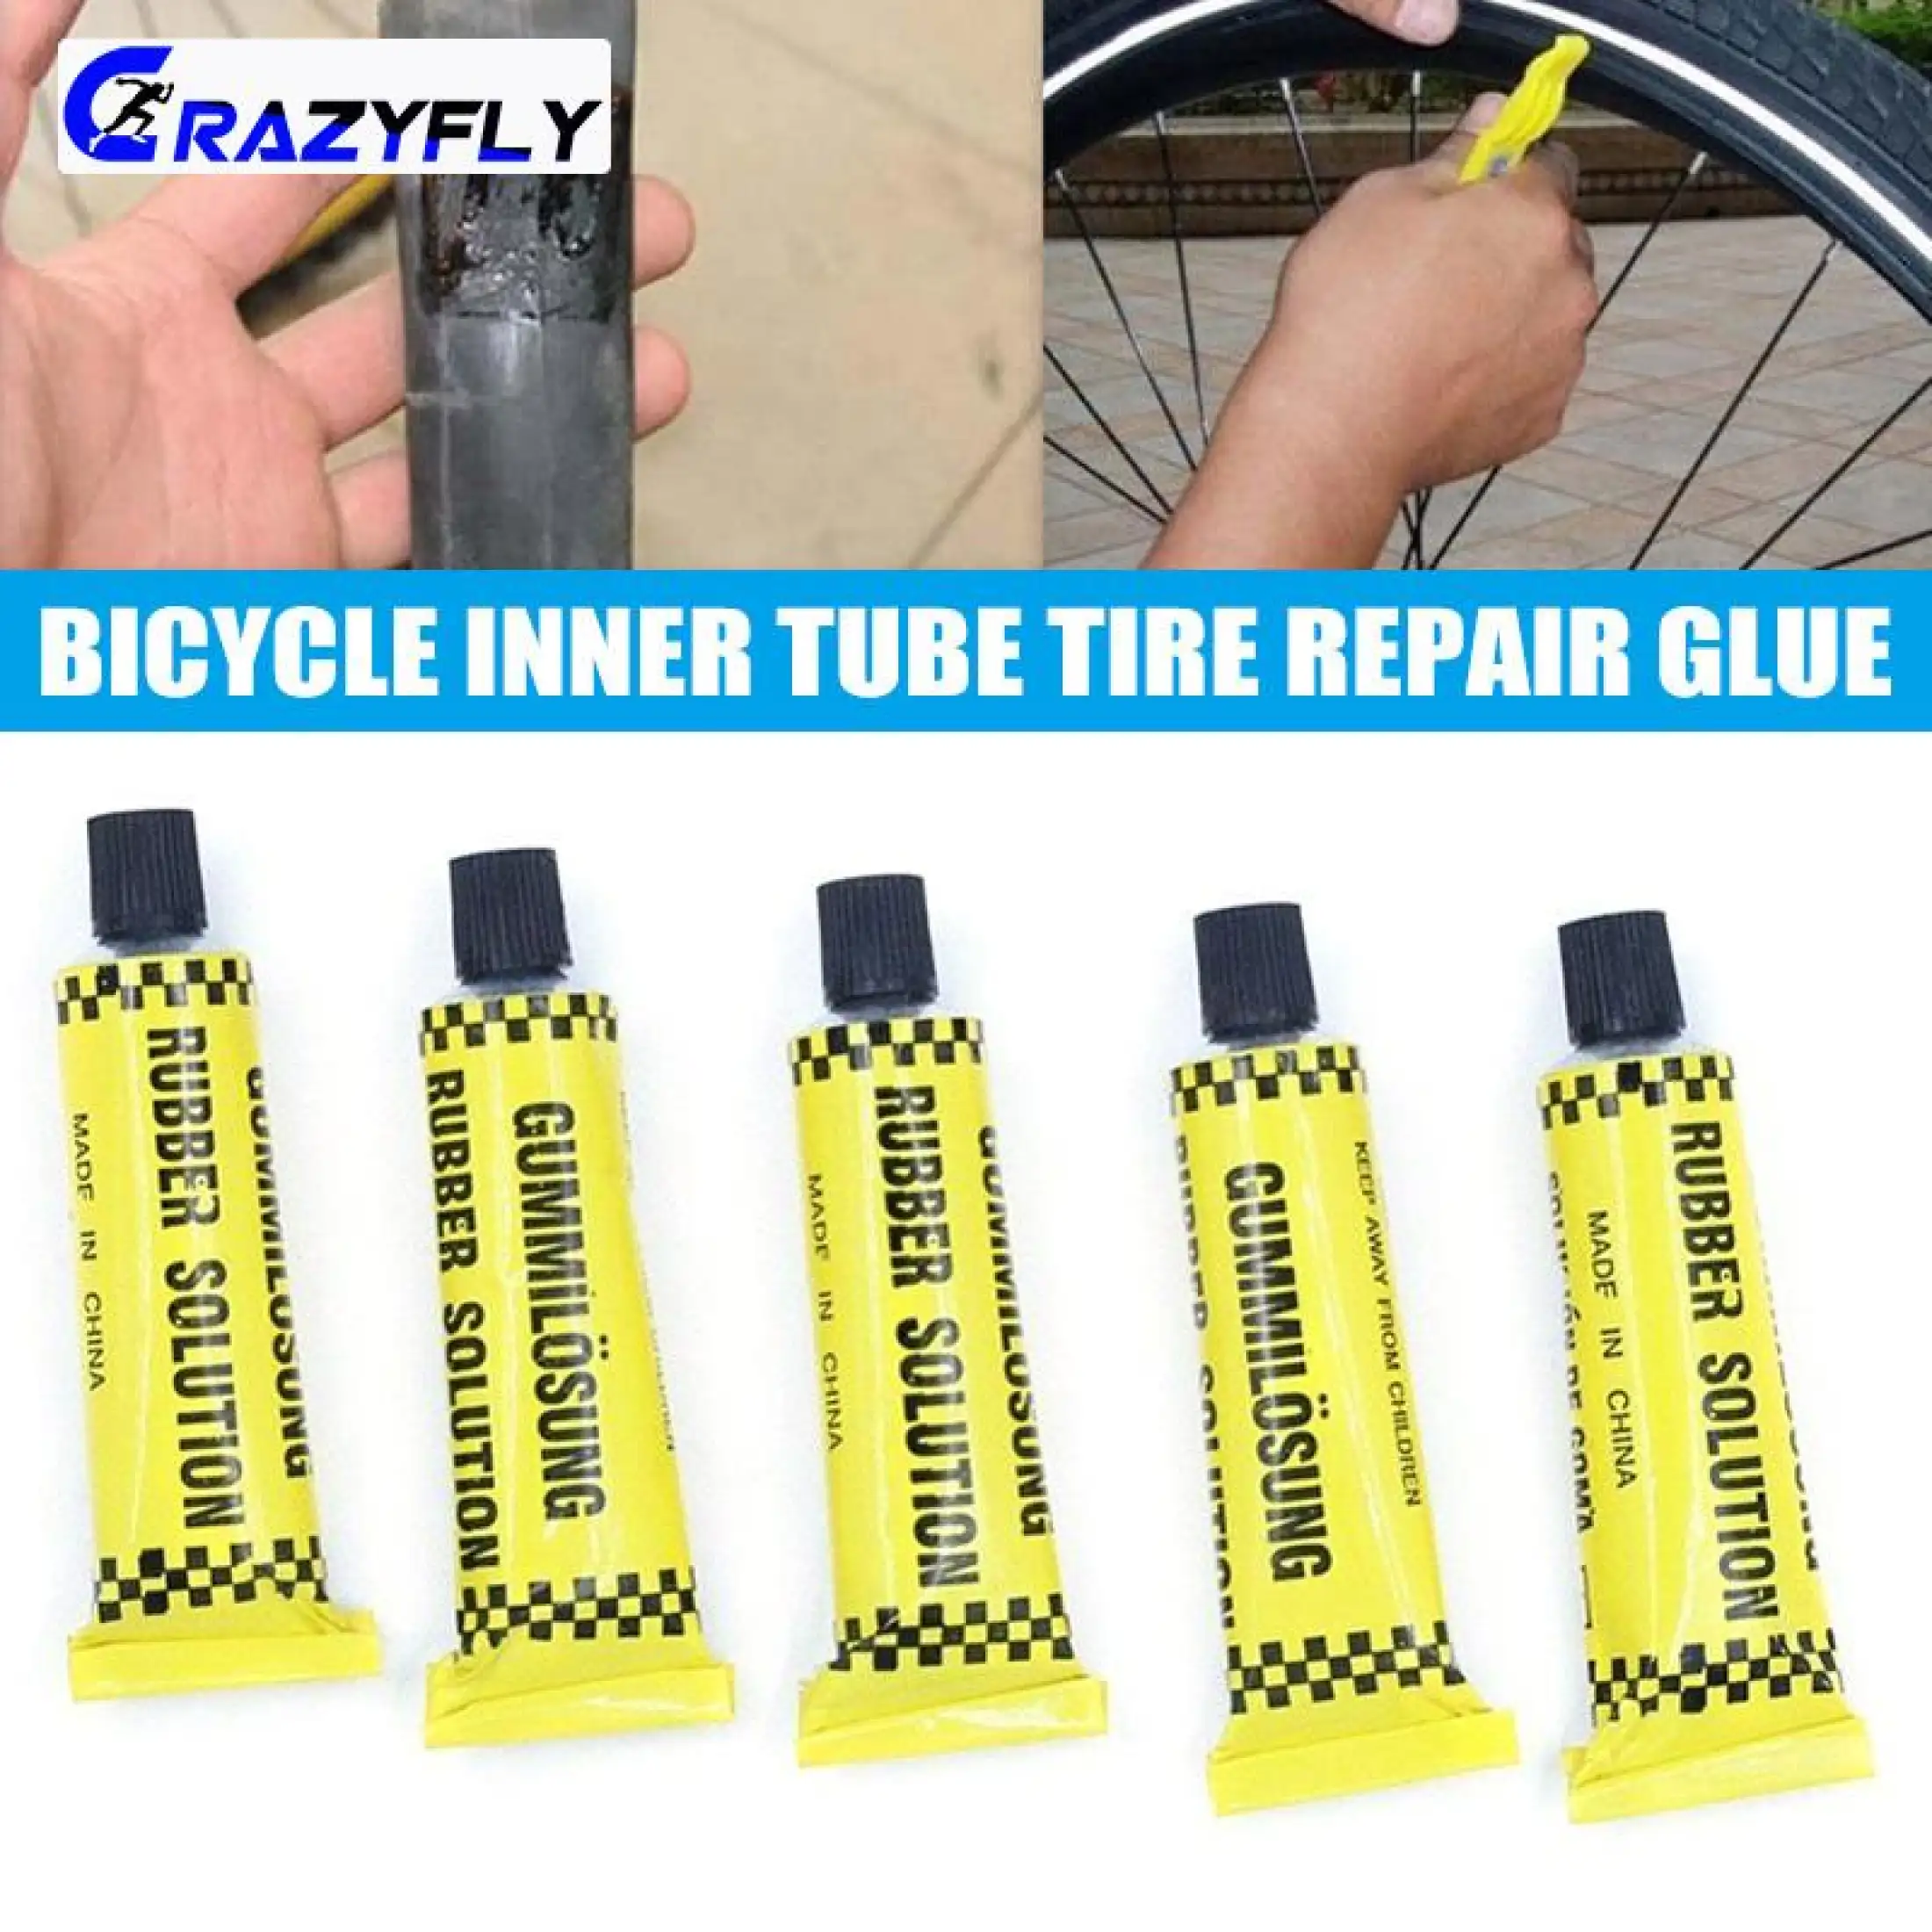 Crazyfly Bicycle Bike Tire Tyre Tube 